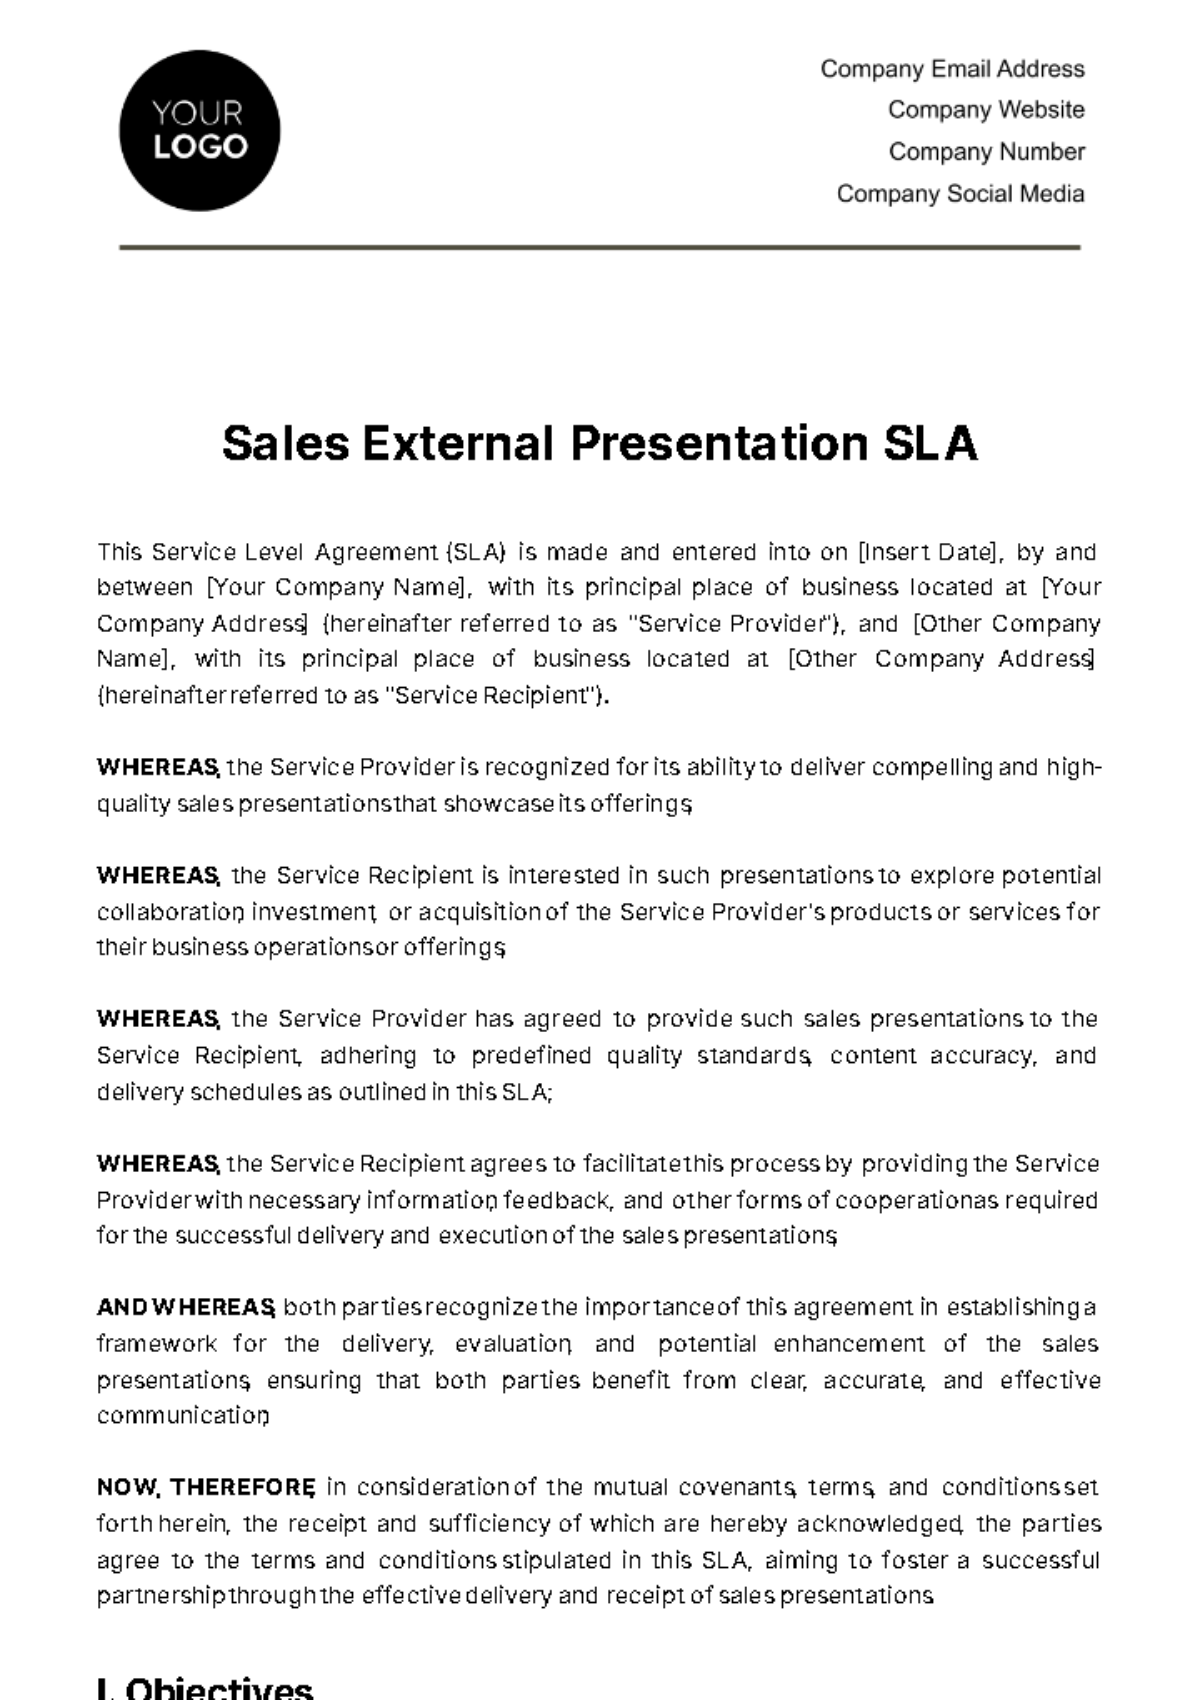 Free Sales External Presentation SLA Template